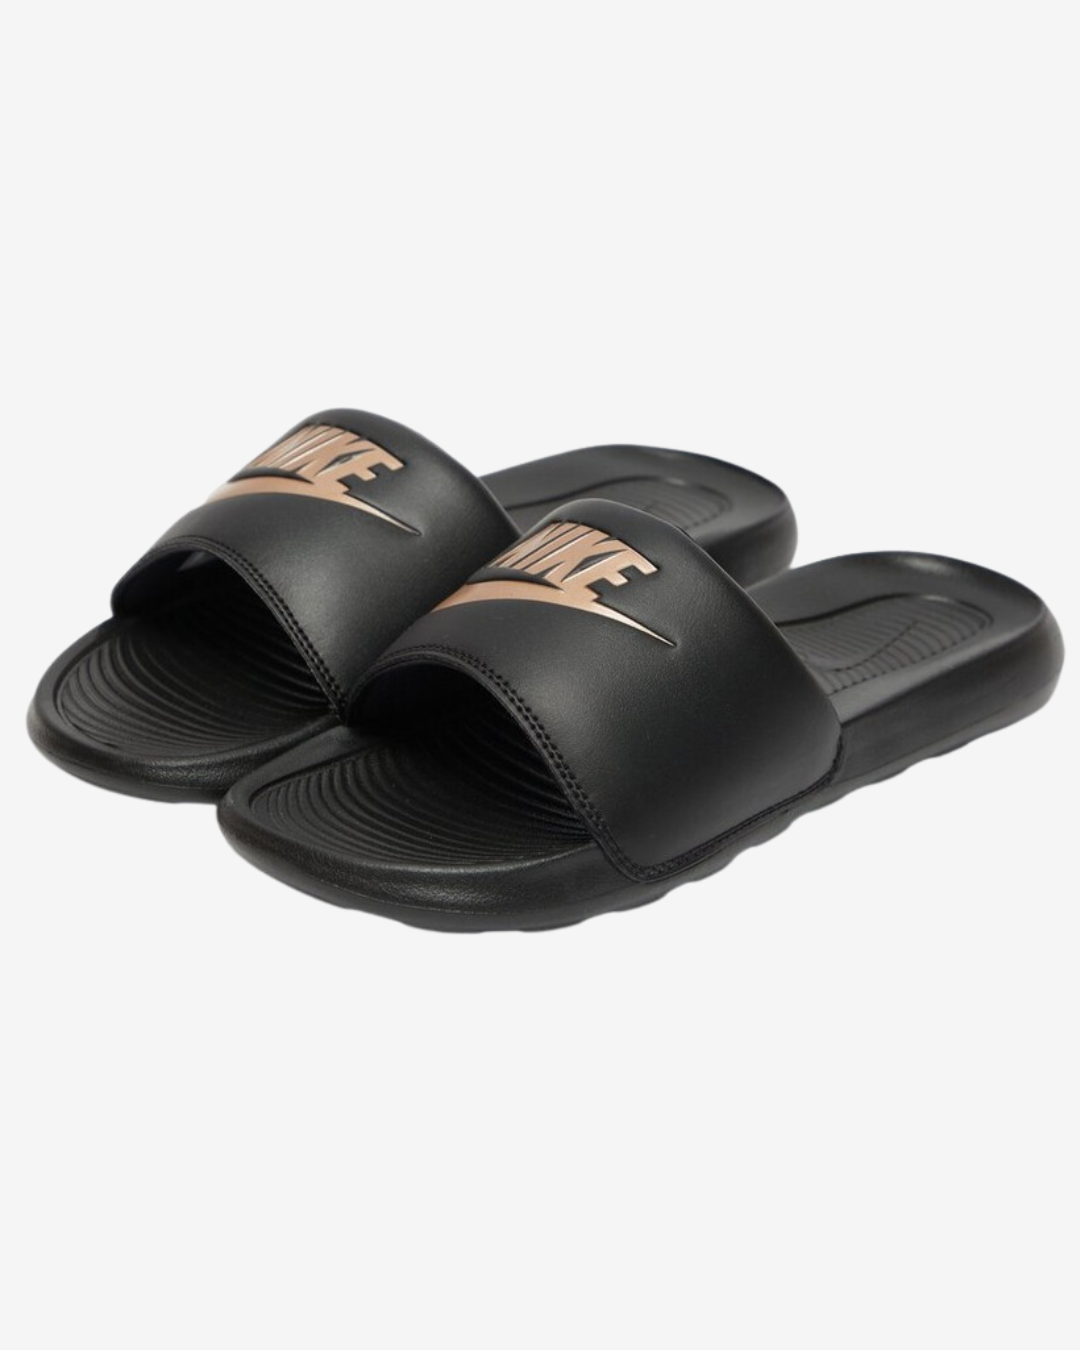 Se Nike Victori slippers - Sort / Bronze - Str. 42 - Modish.dk hos Modish.dk